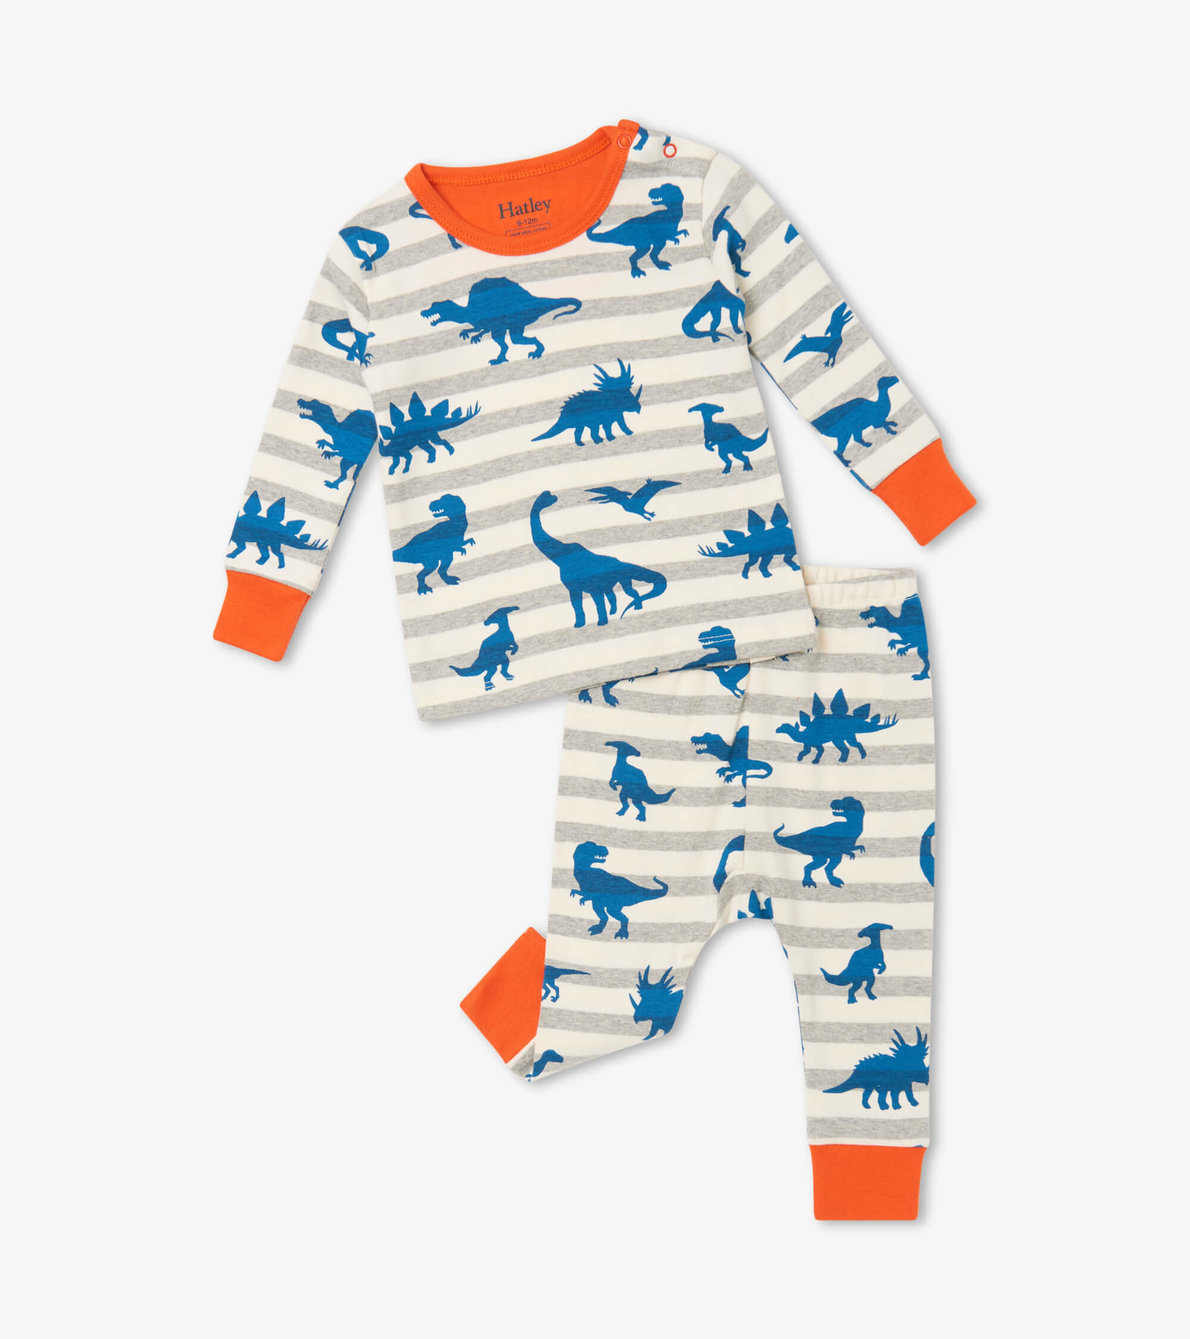 View larger image of Dino Silhouettes Organic Cotton Baby Pajama Set